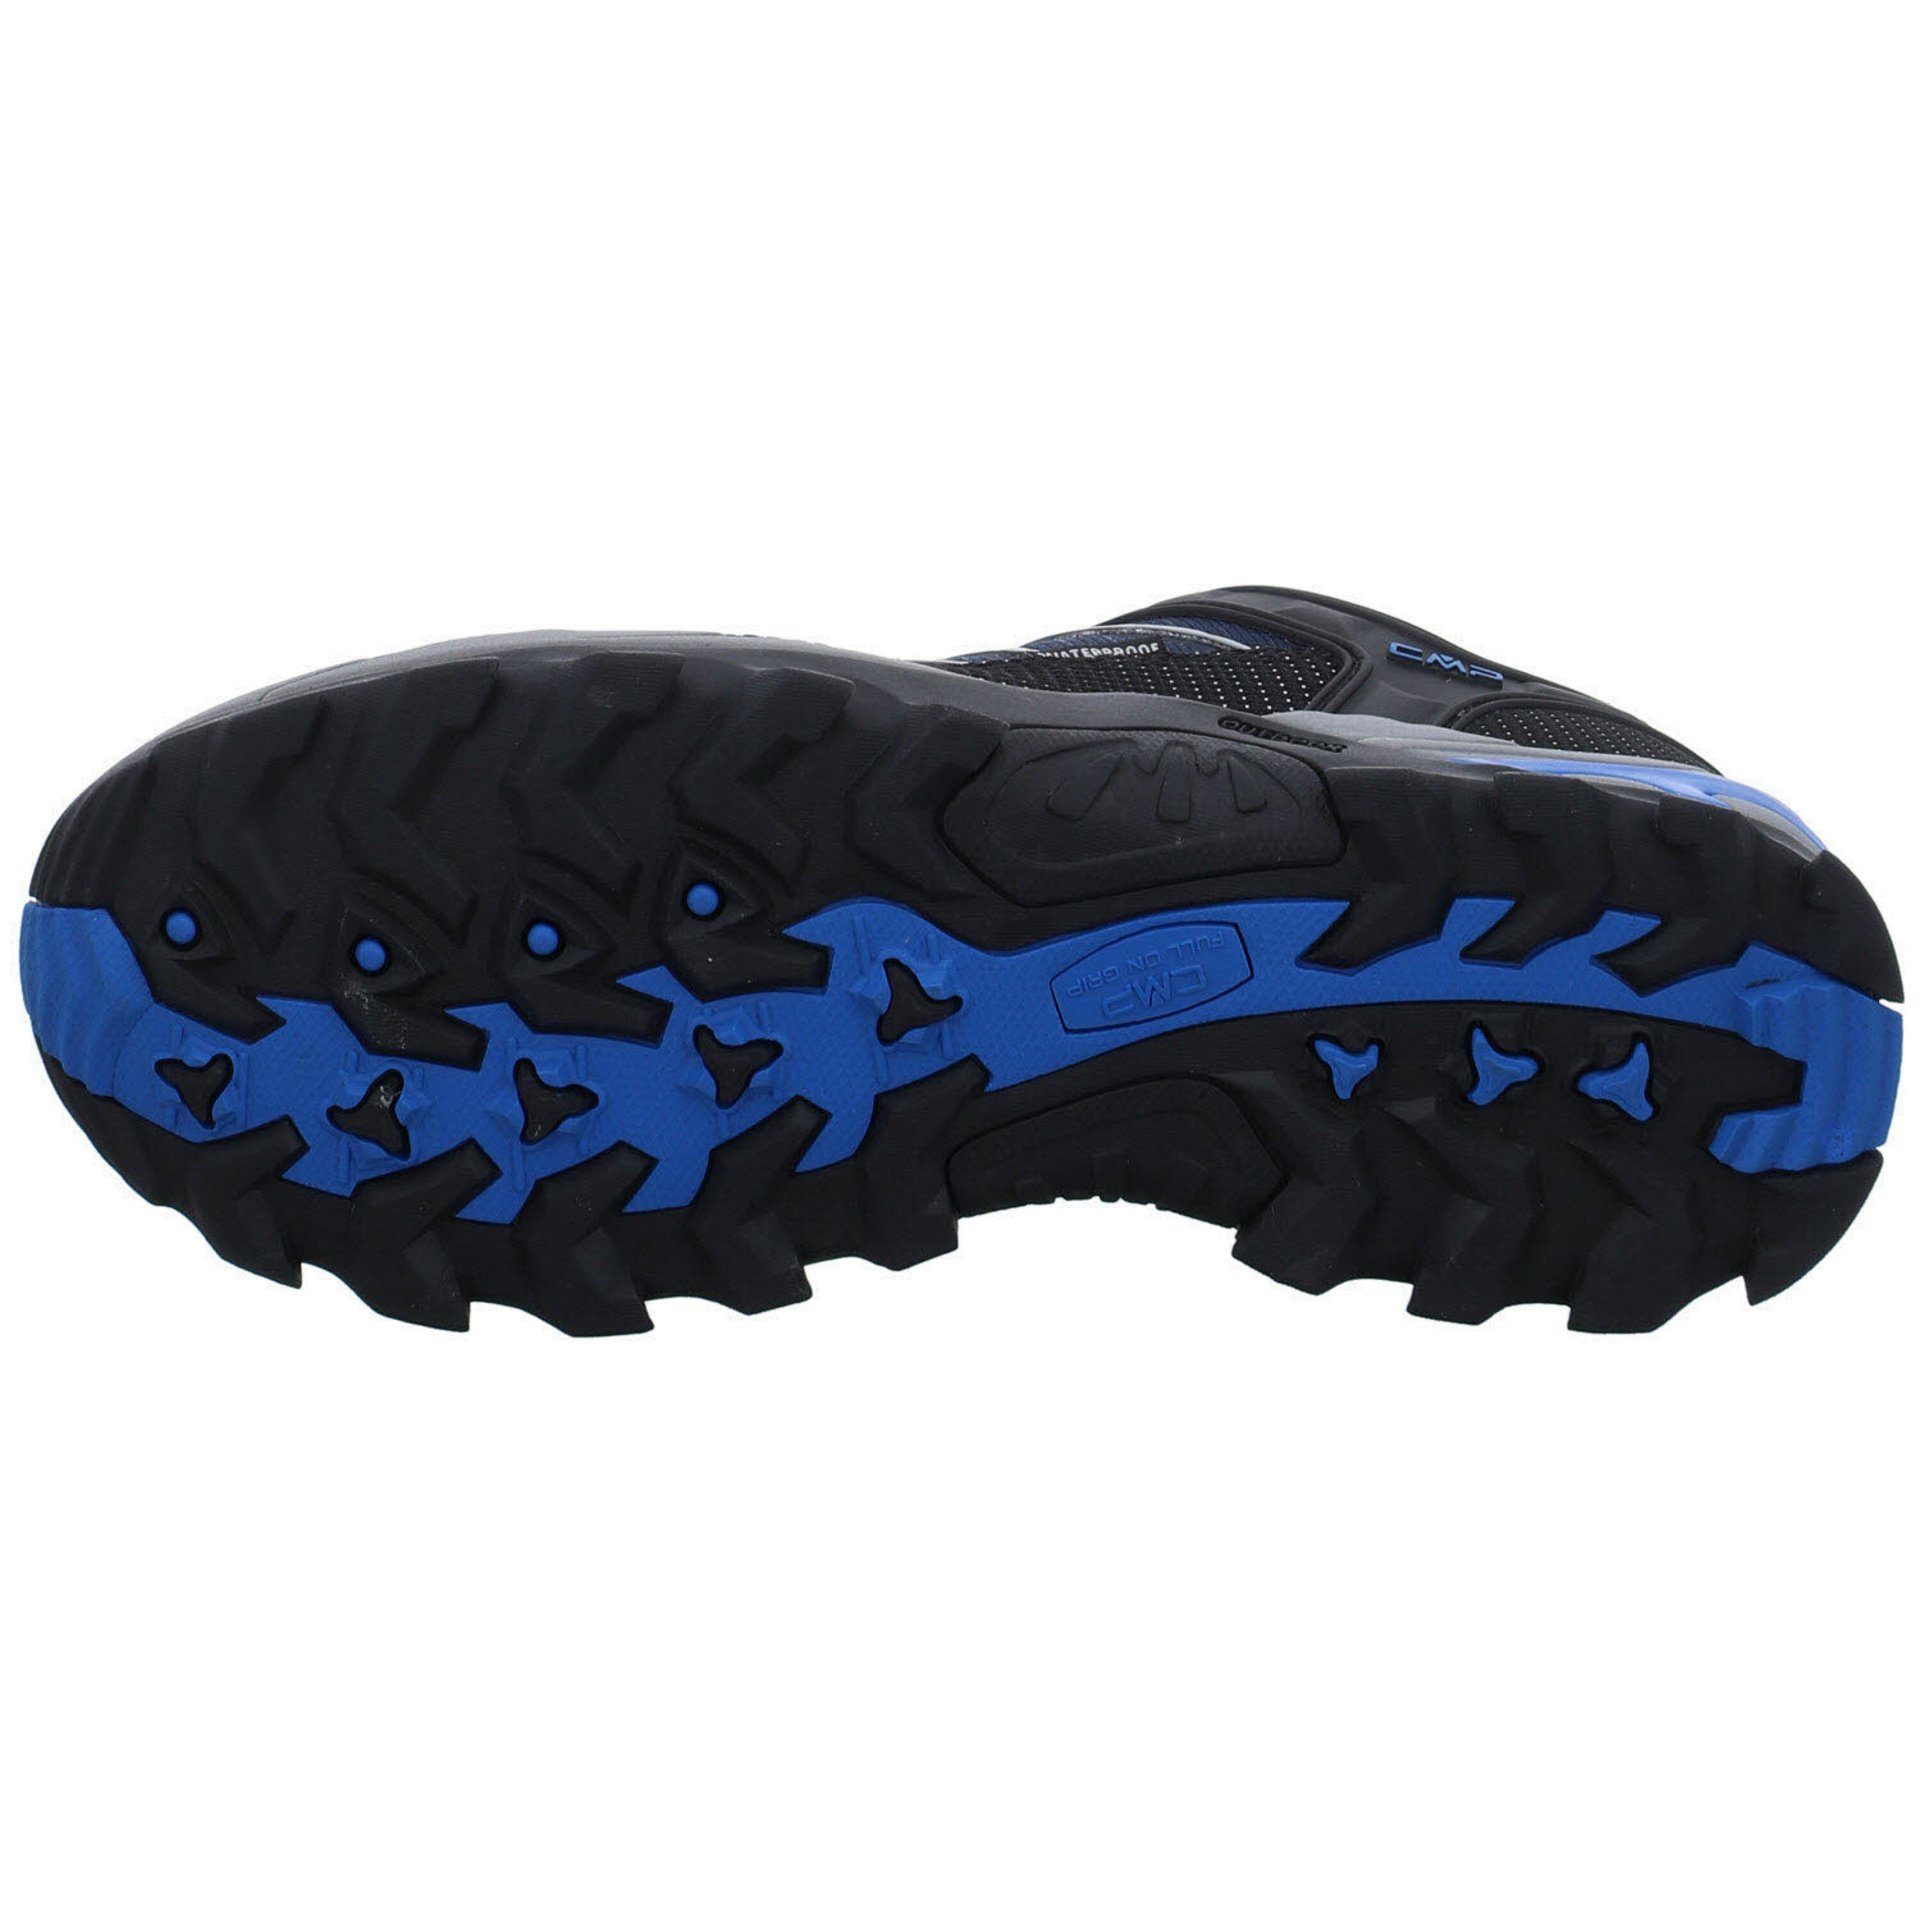 CMP Herren (295) Outdoorschuh Low Schuhe Outdoorschuh Leder-/Textilkombination Outdoor Rigel dunkelblau